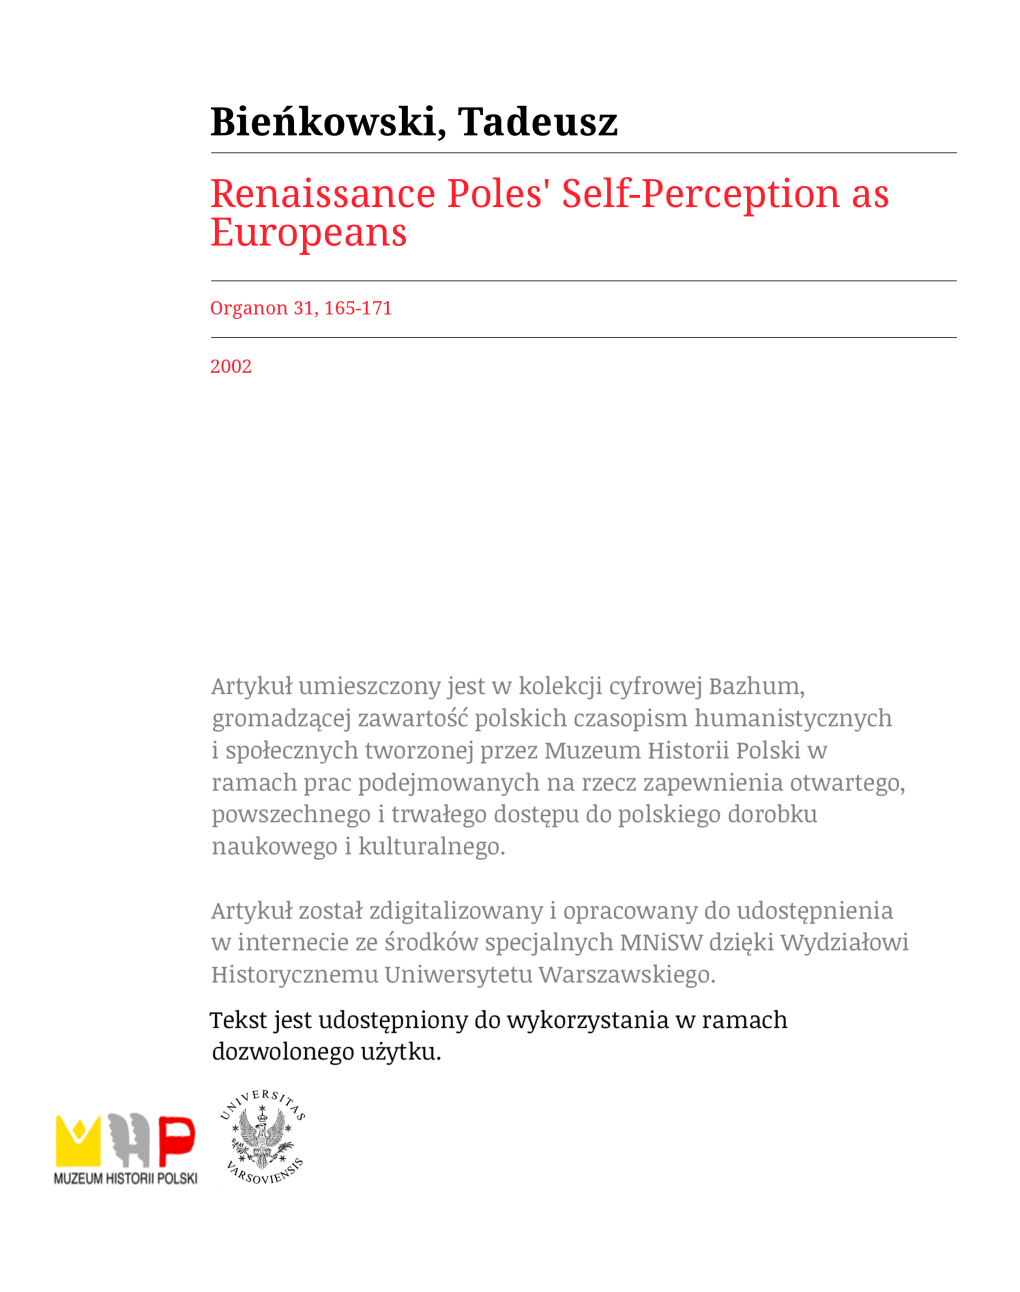 Renaissance Poles'self-Perception As